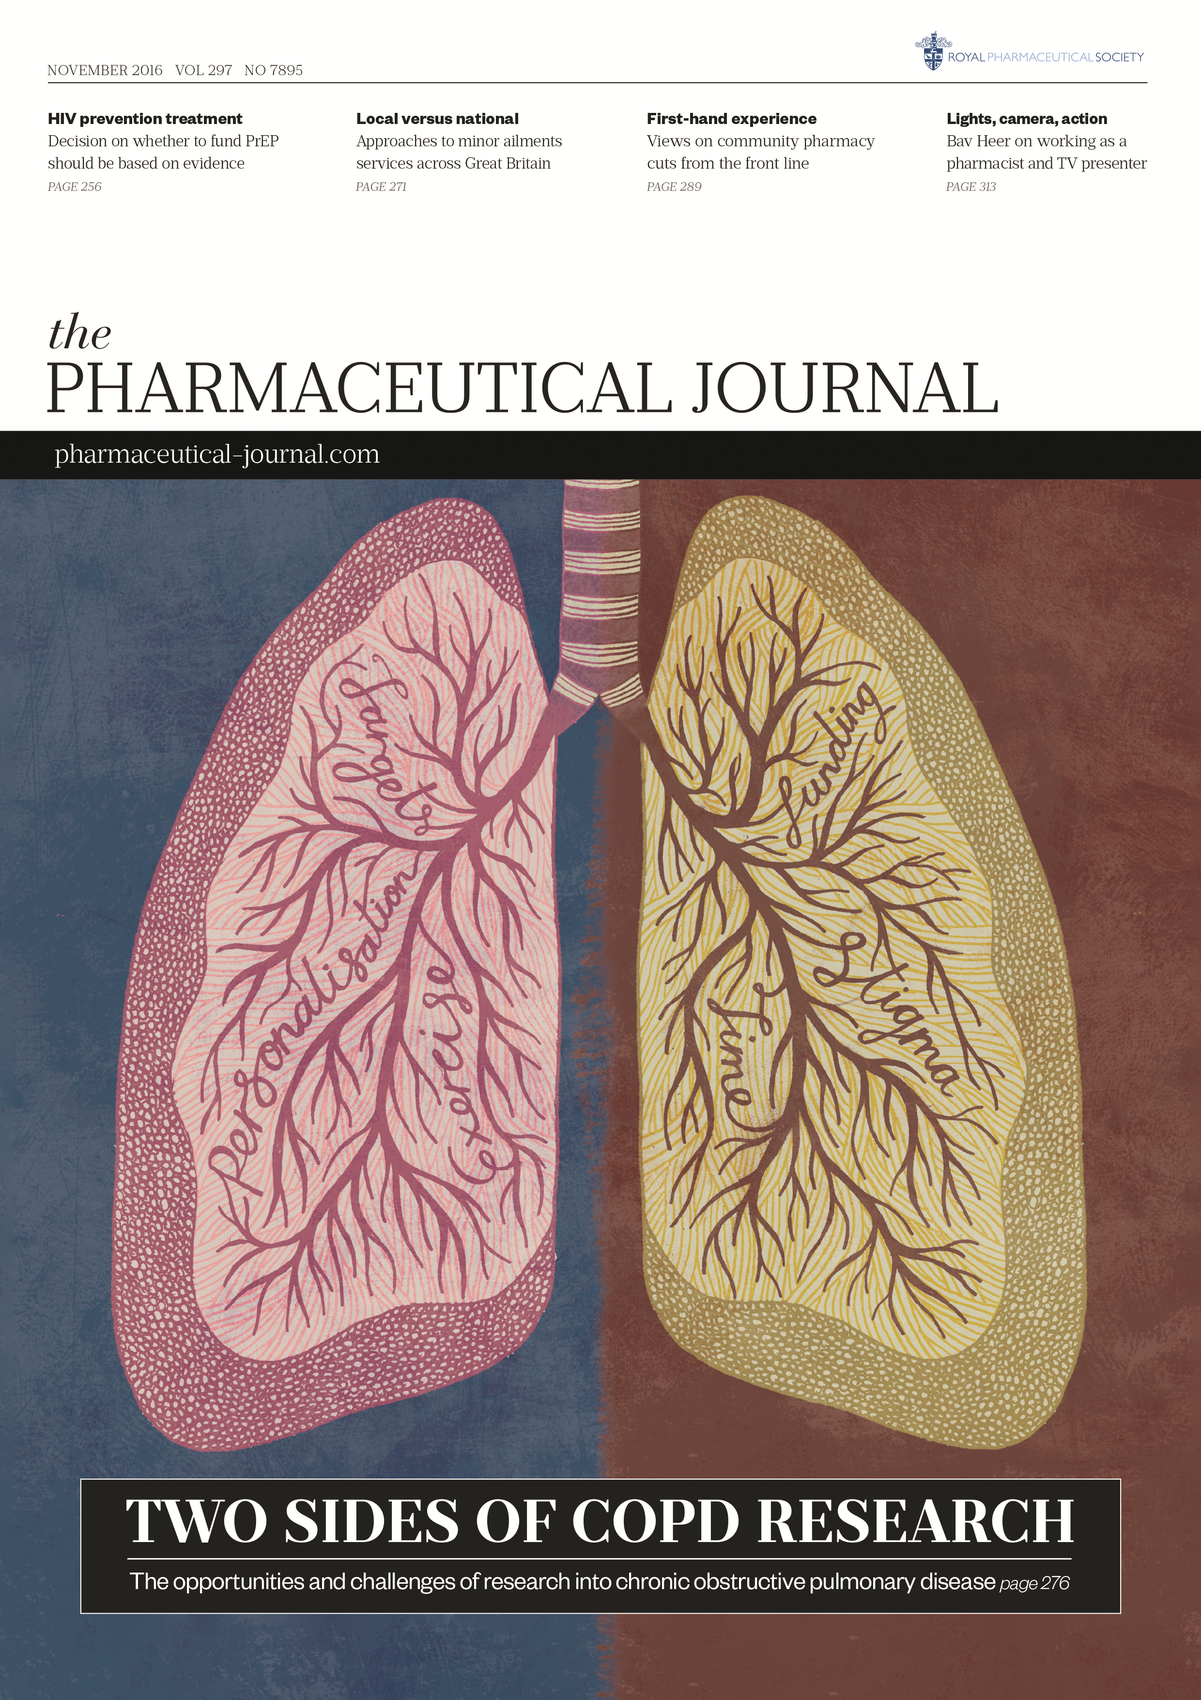 Publication issue cover for PJ, November 2016, Vol 297, No 7895